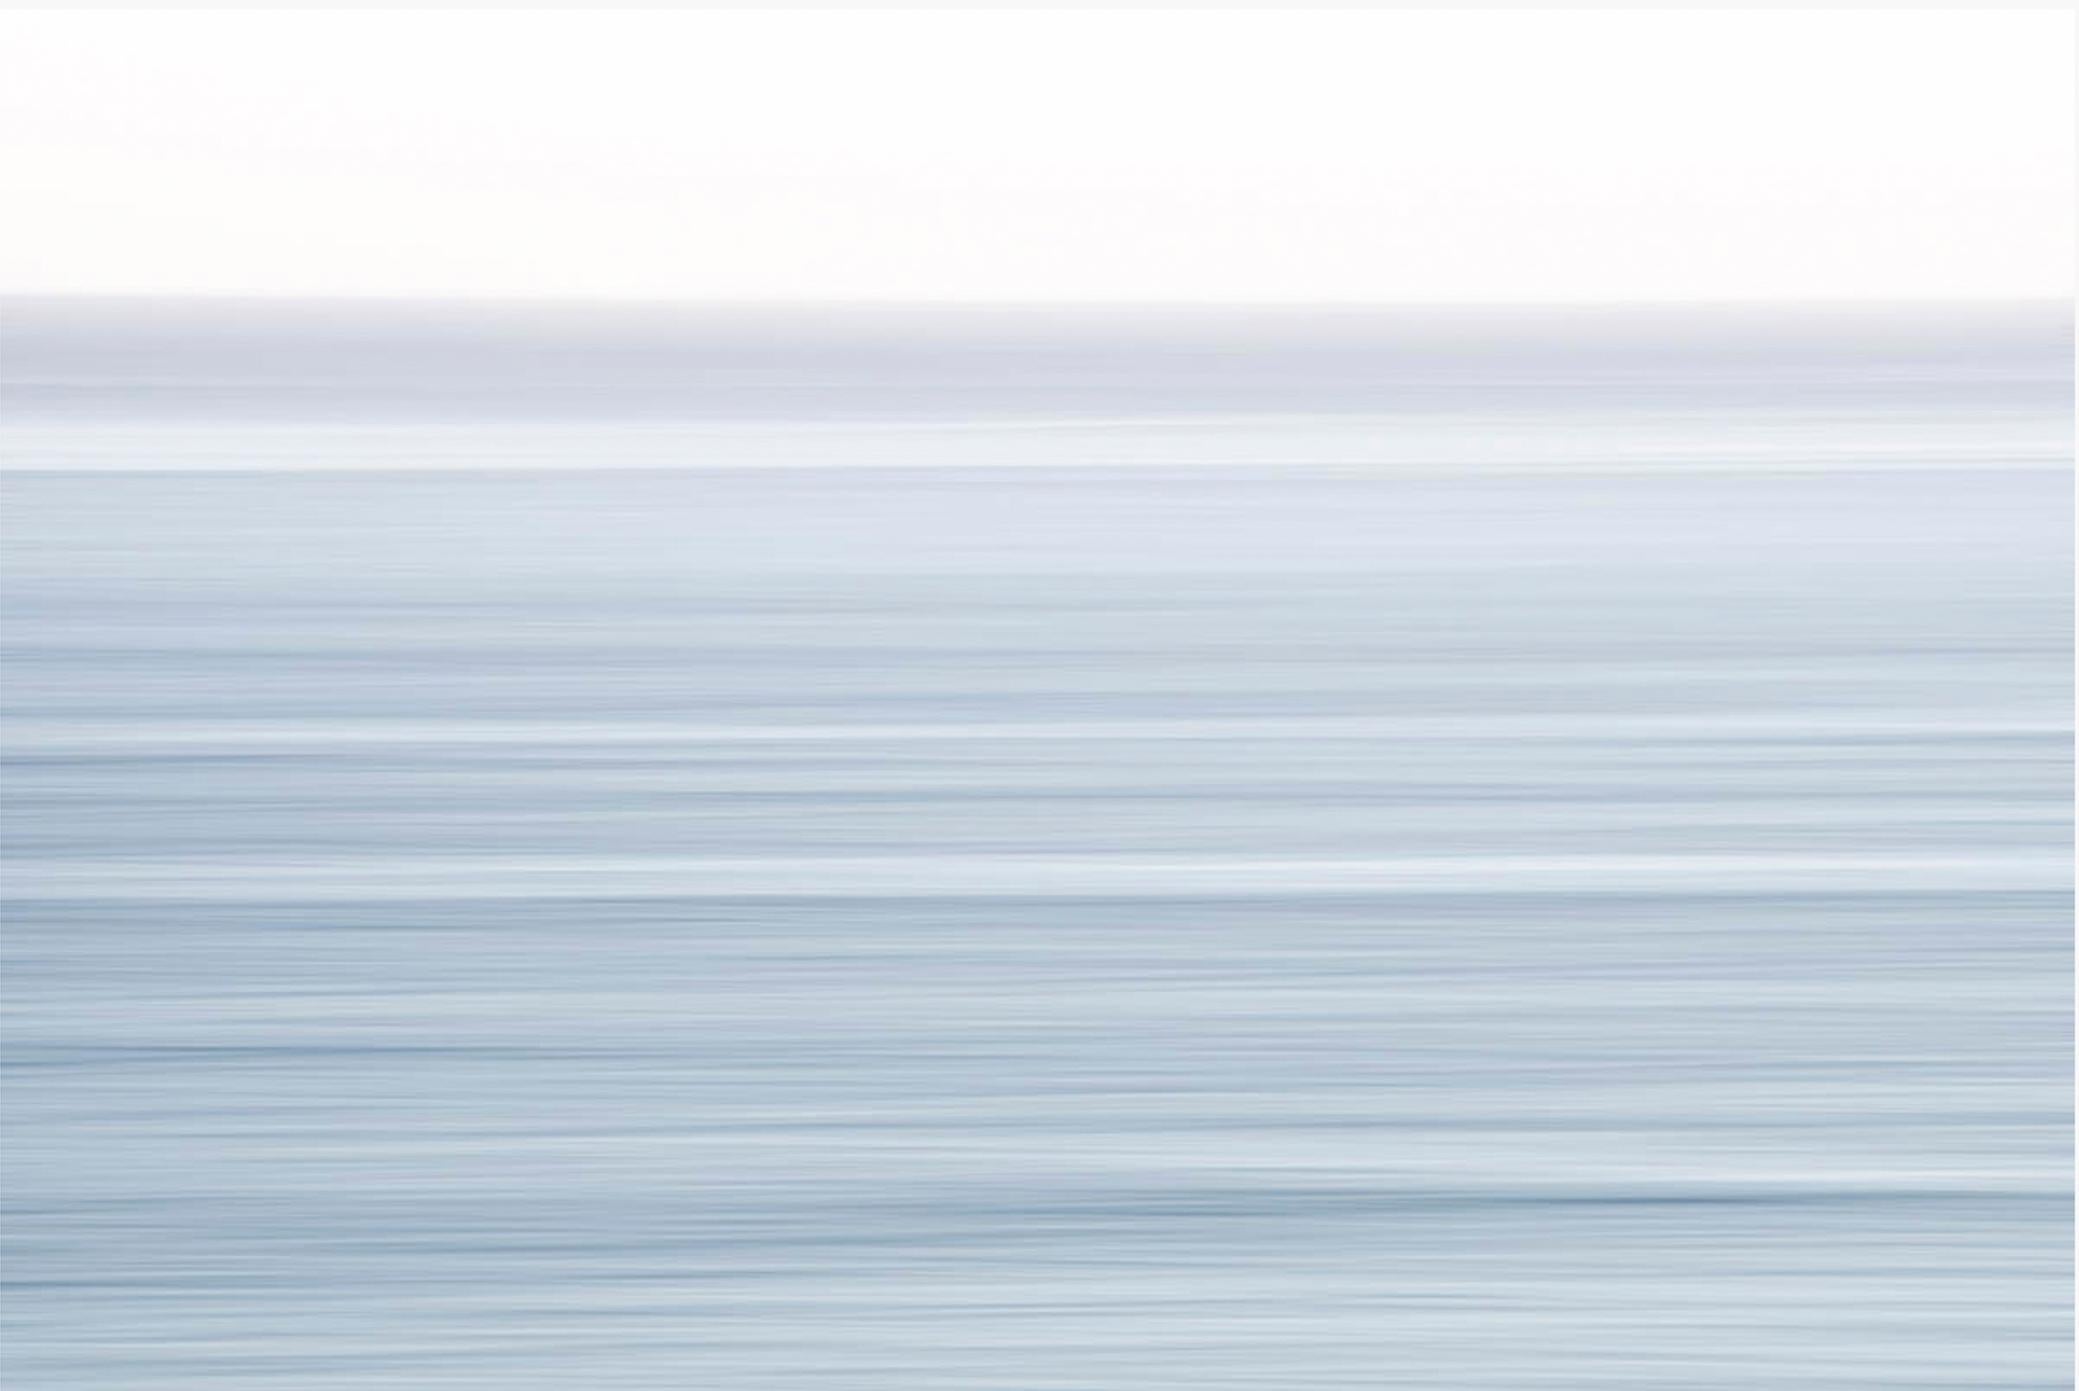 Tori Gagne Landscape Photograph - "Misty Morning" Contemporary Photograph, 24" x 36"